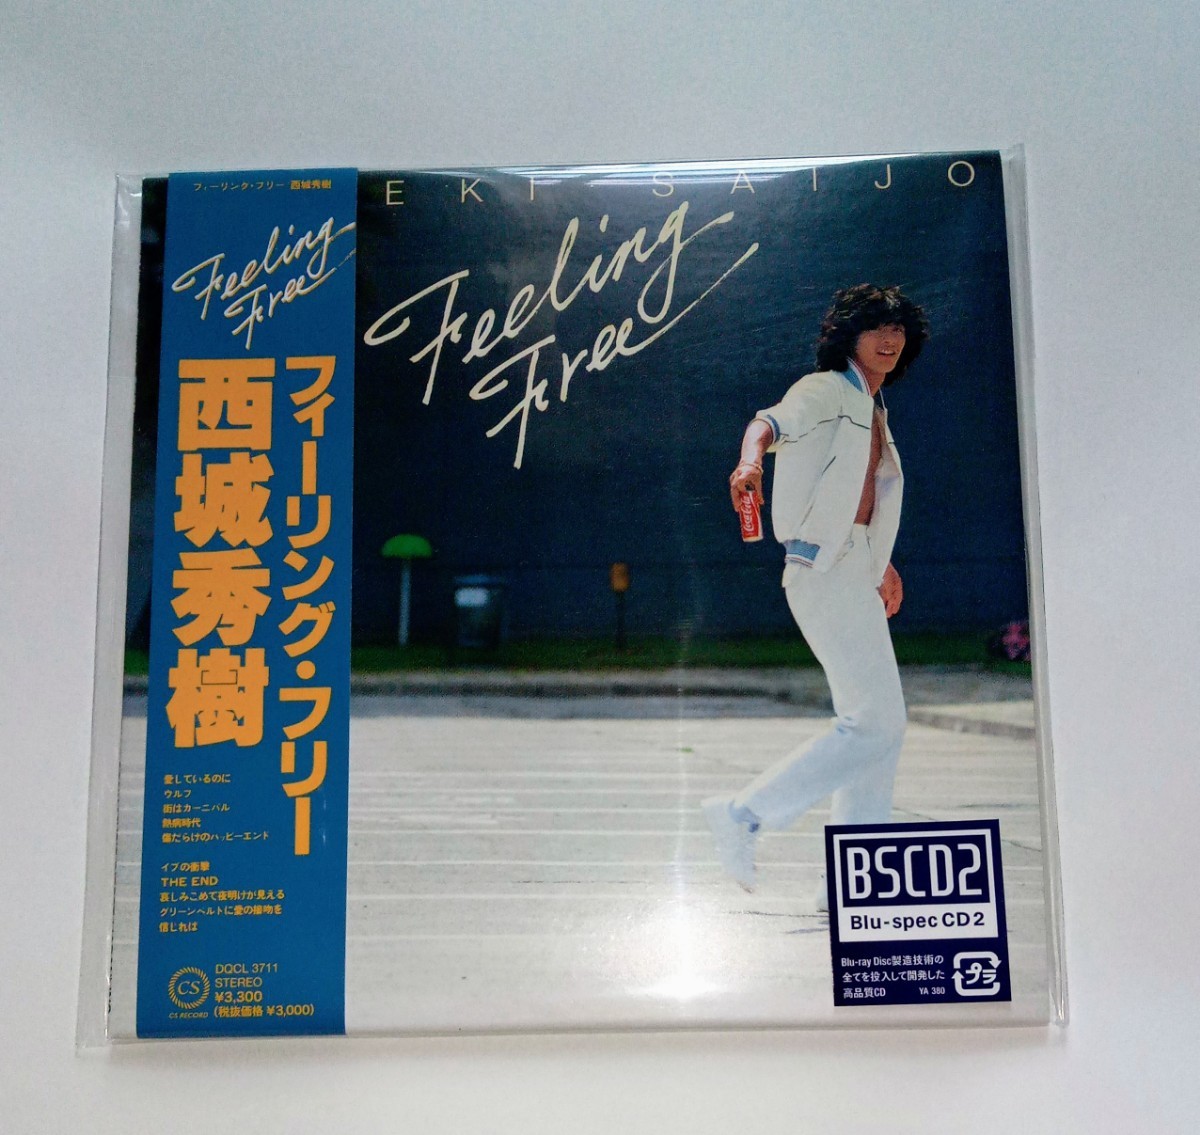 西城秀樹 紙ジャケCD「Feeling Free」◆高音質Blu-spec CD2◆送料無料_画像2